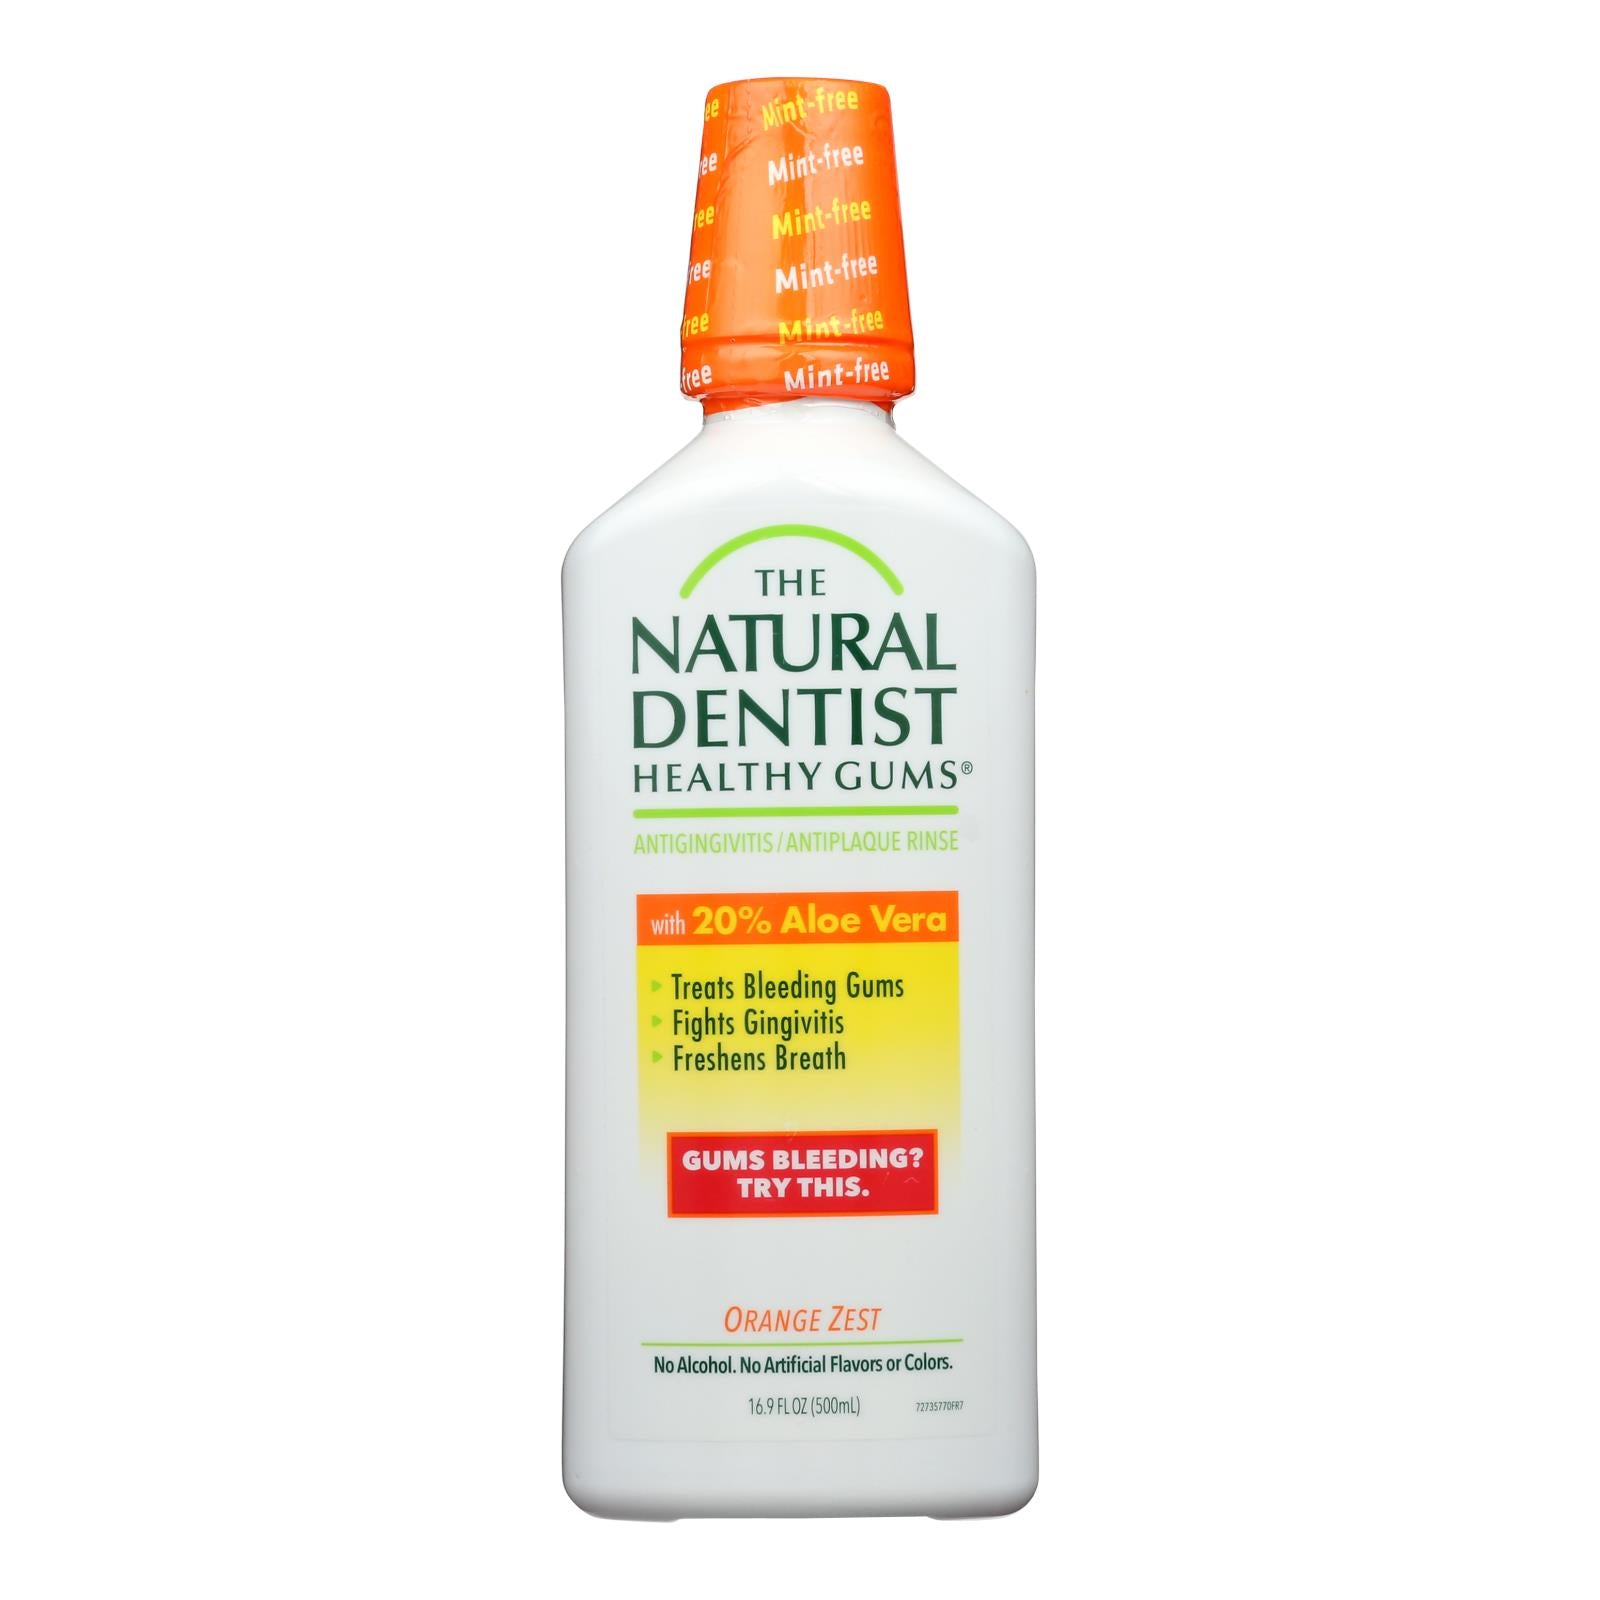 Natural Dentist Daily Healthy Gums Antigingivitis Rinse Orange Zest - 16 fl oz